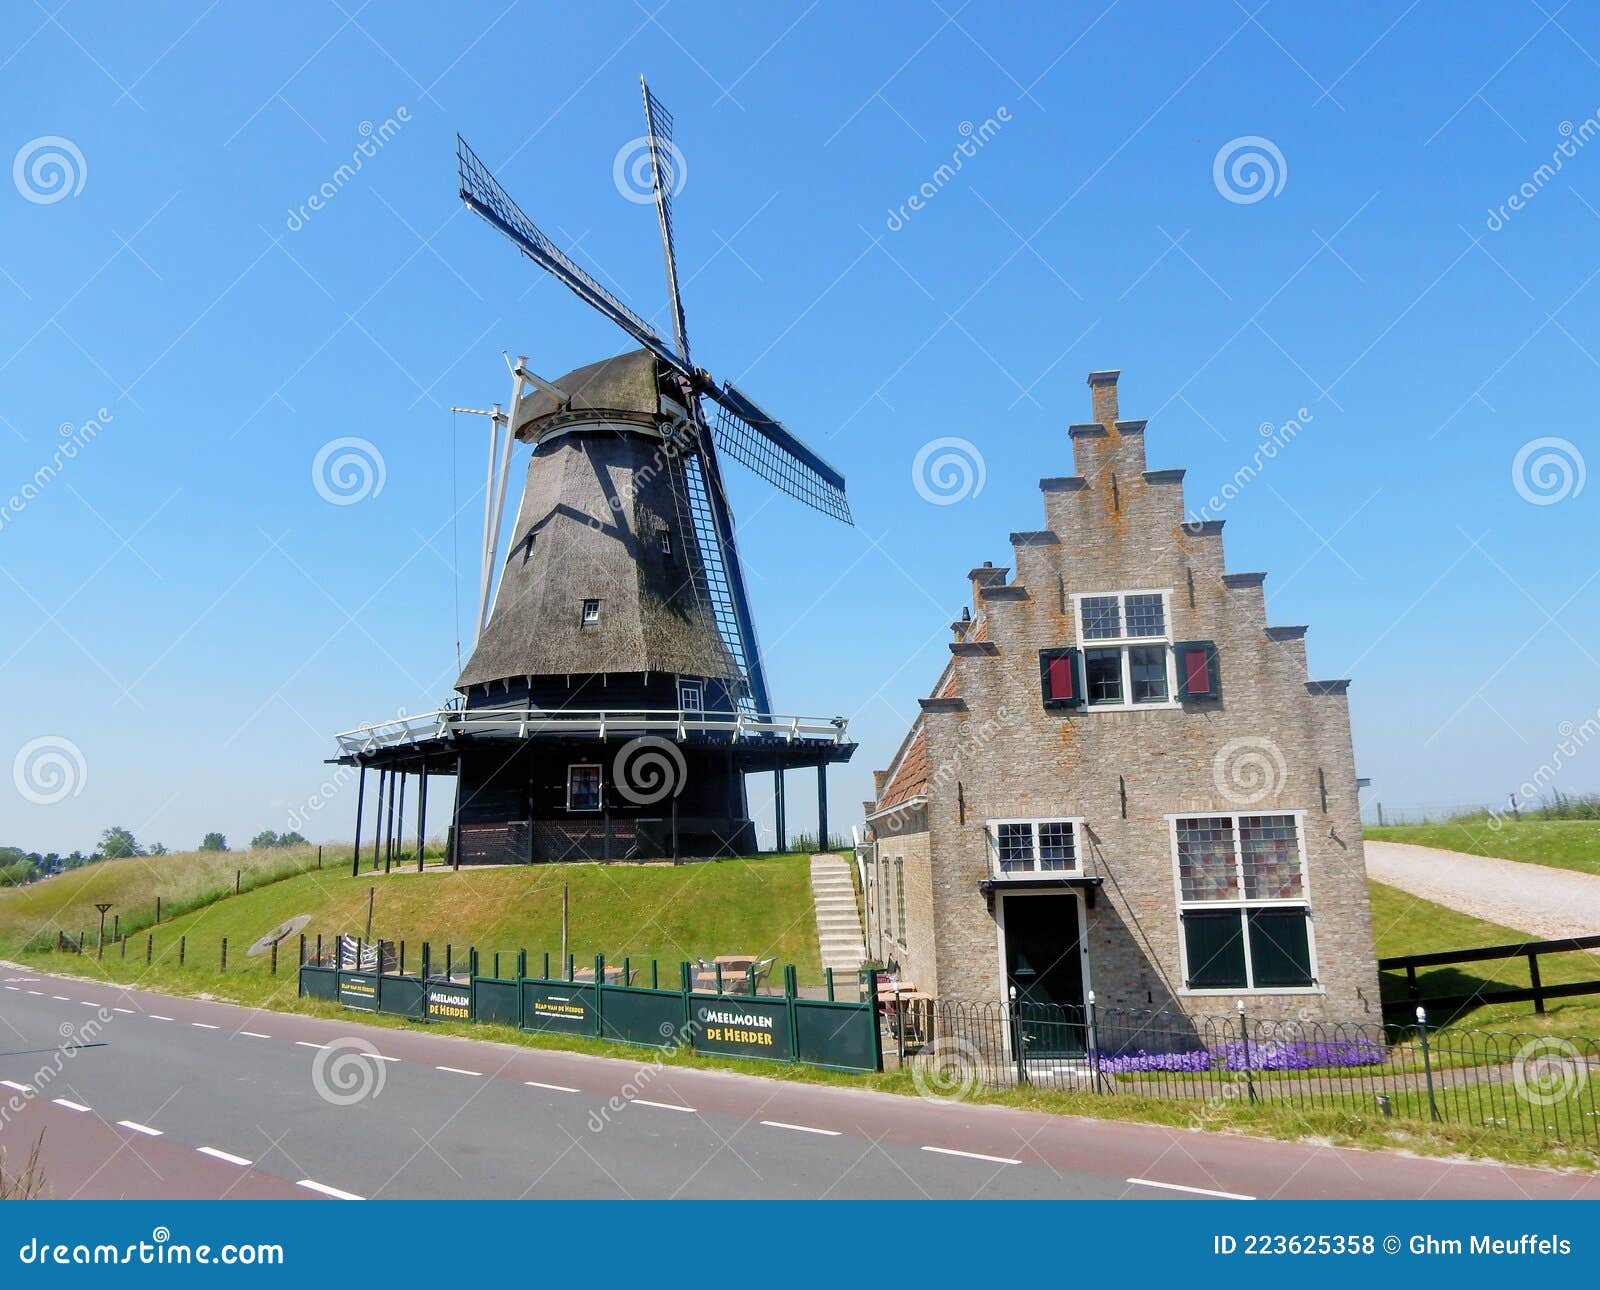 molen de herder, dutch windmill the shepherd, tower mill located in medemblik, north holland, netherlands